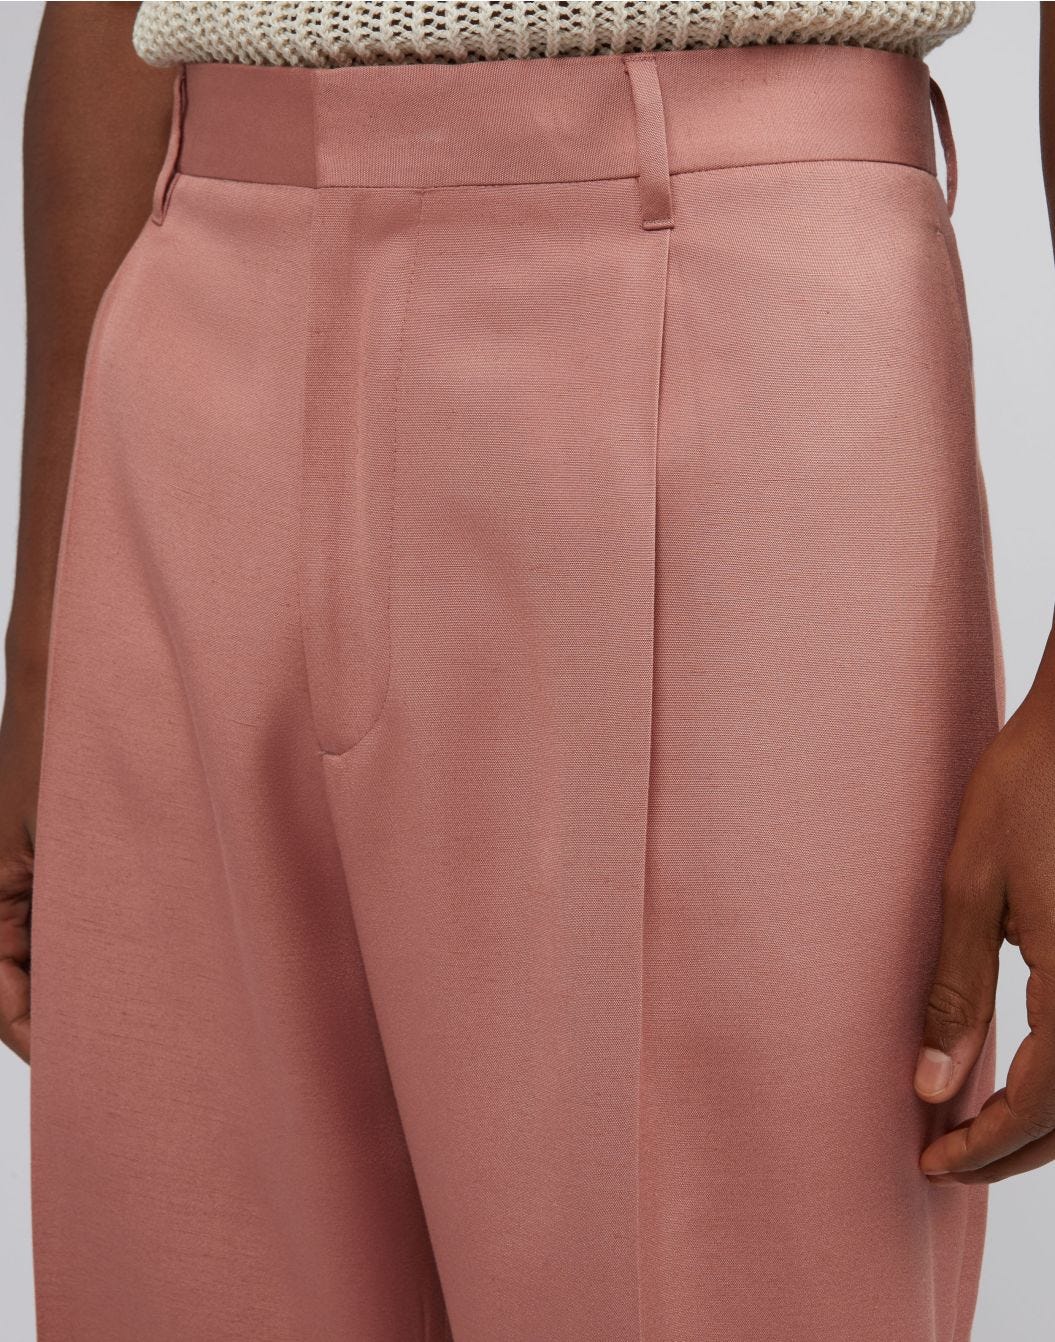 Pantalone comfort rosa in viscosa